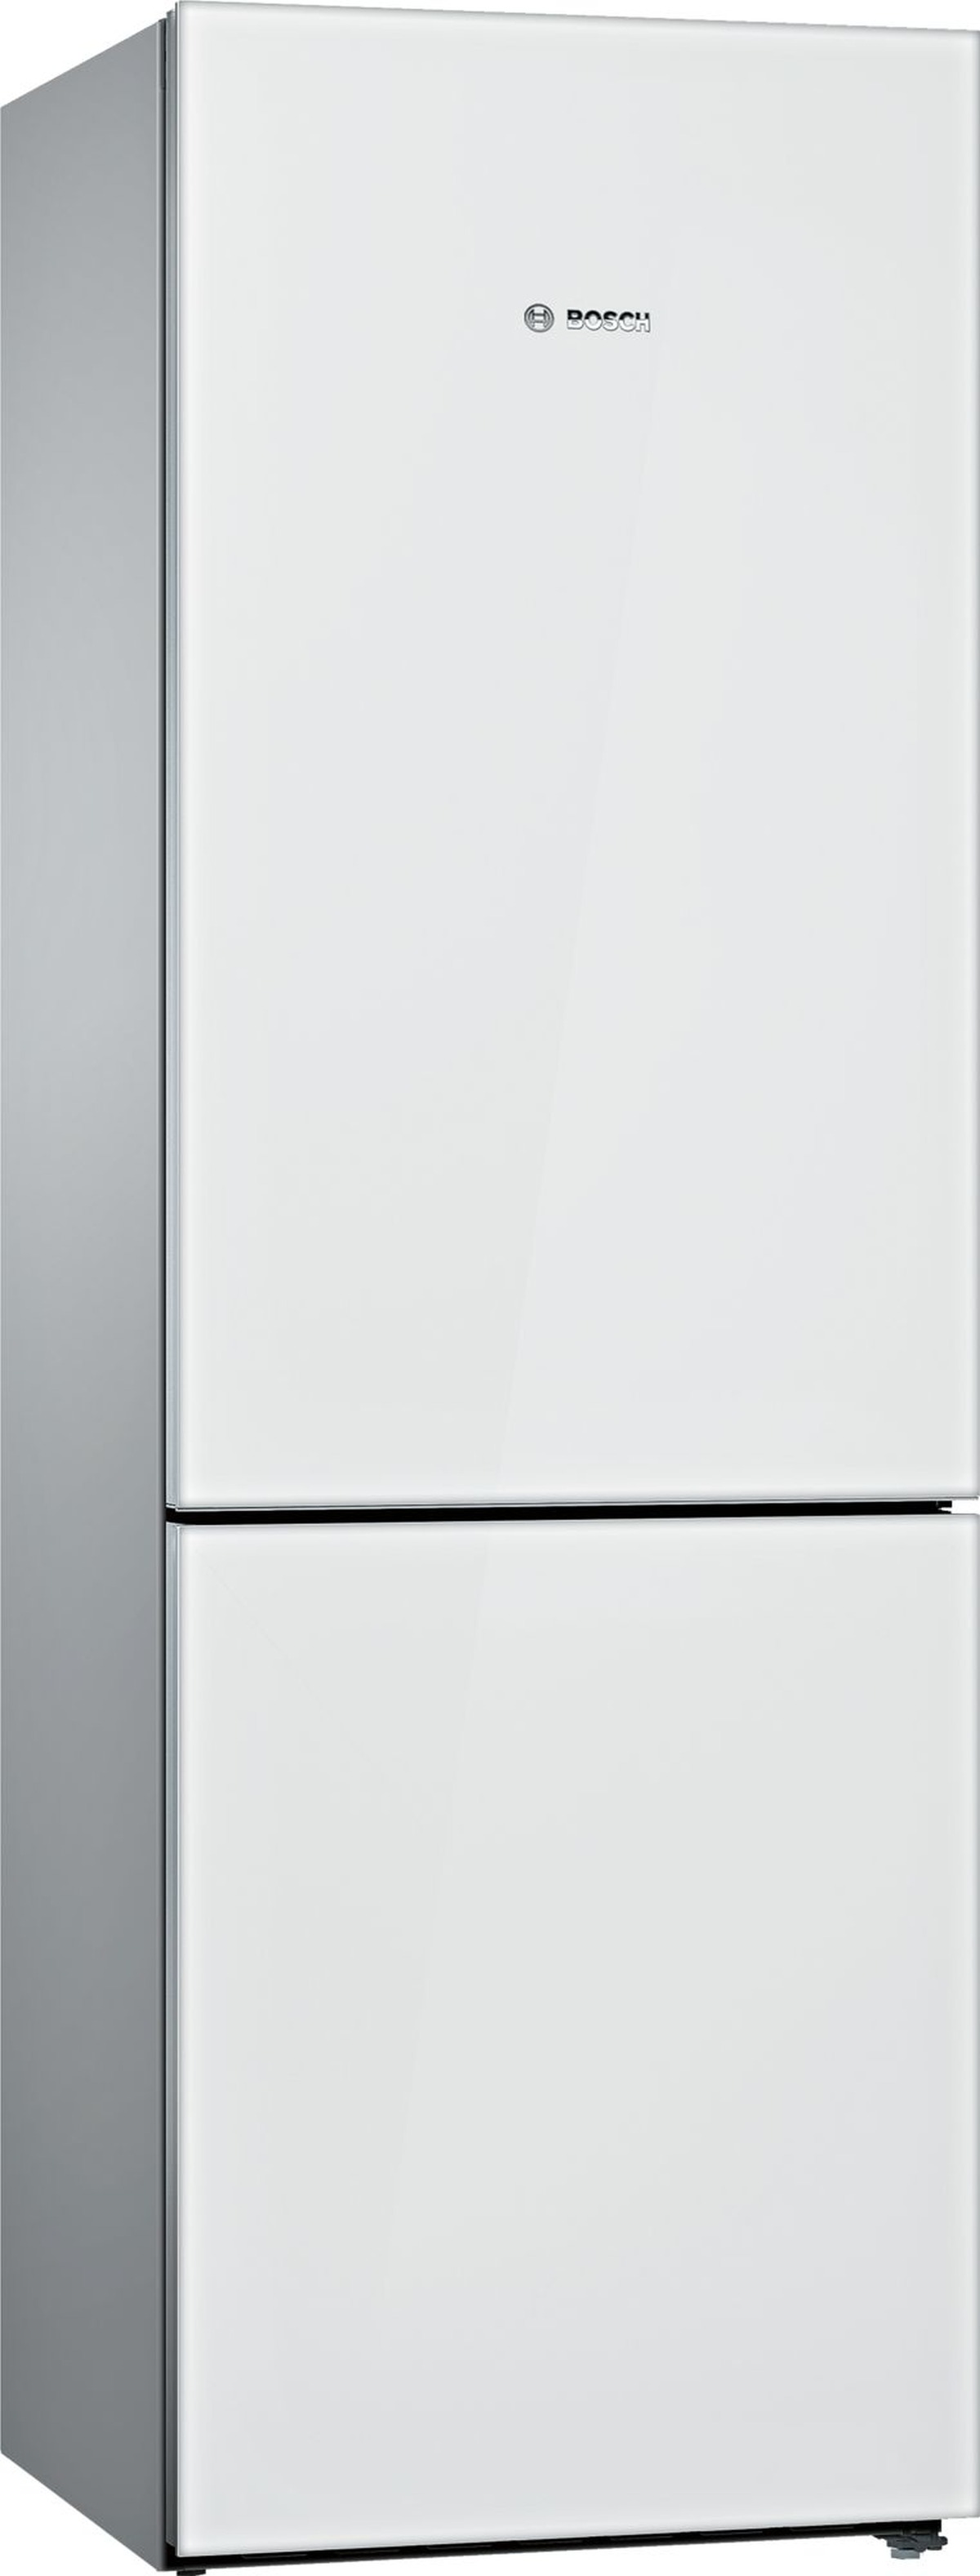 Bosch® 800 Series 10.0 Cu. Ft. White Counter Depth Bottom Freezer Refrigerator